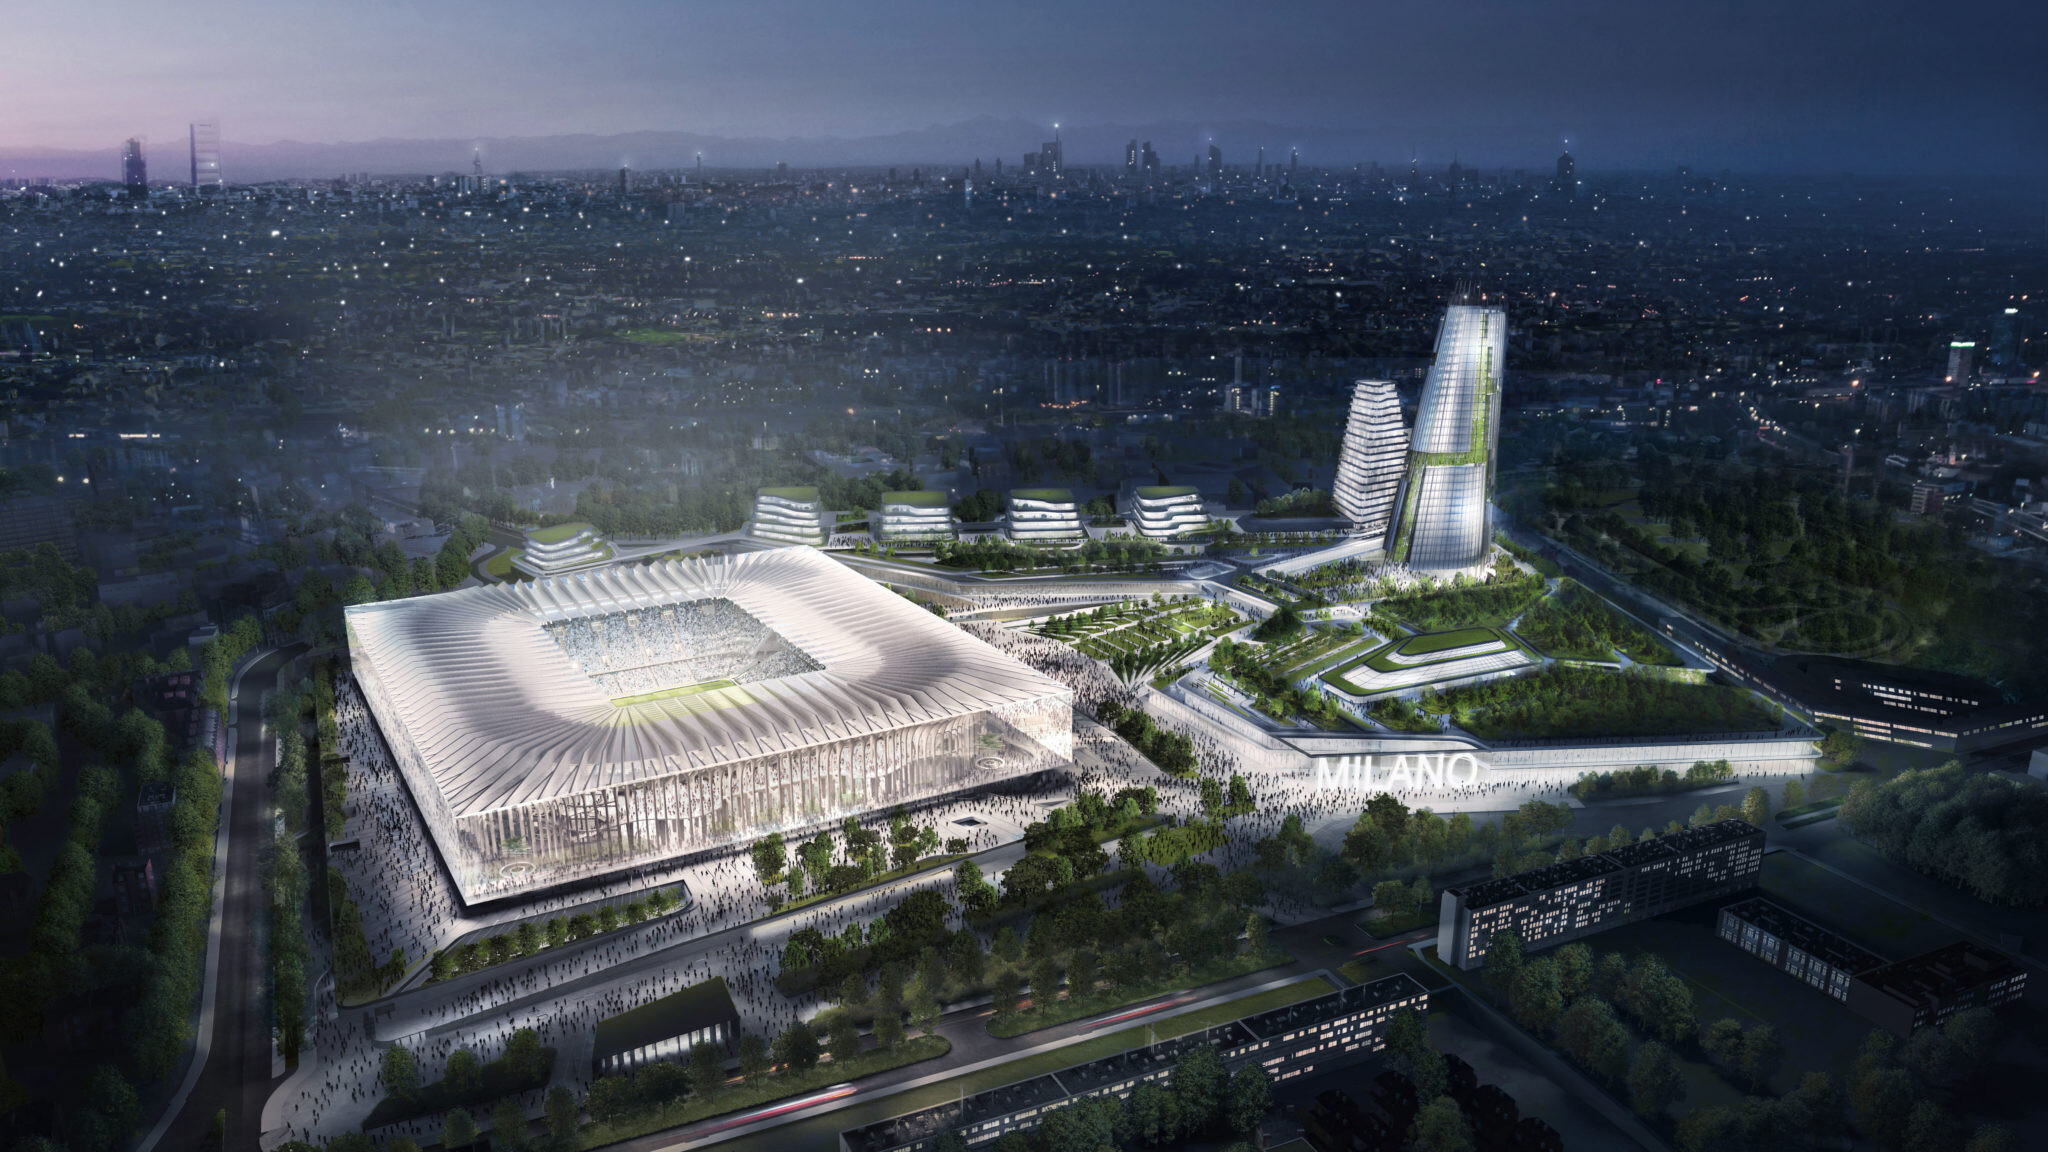 More information about "The Cathedral: Το νέο μεικτής χρήσης στάδιο με ποδοσφαιρικό γήπεδο στο Μιλάνο"